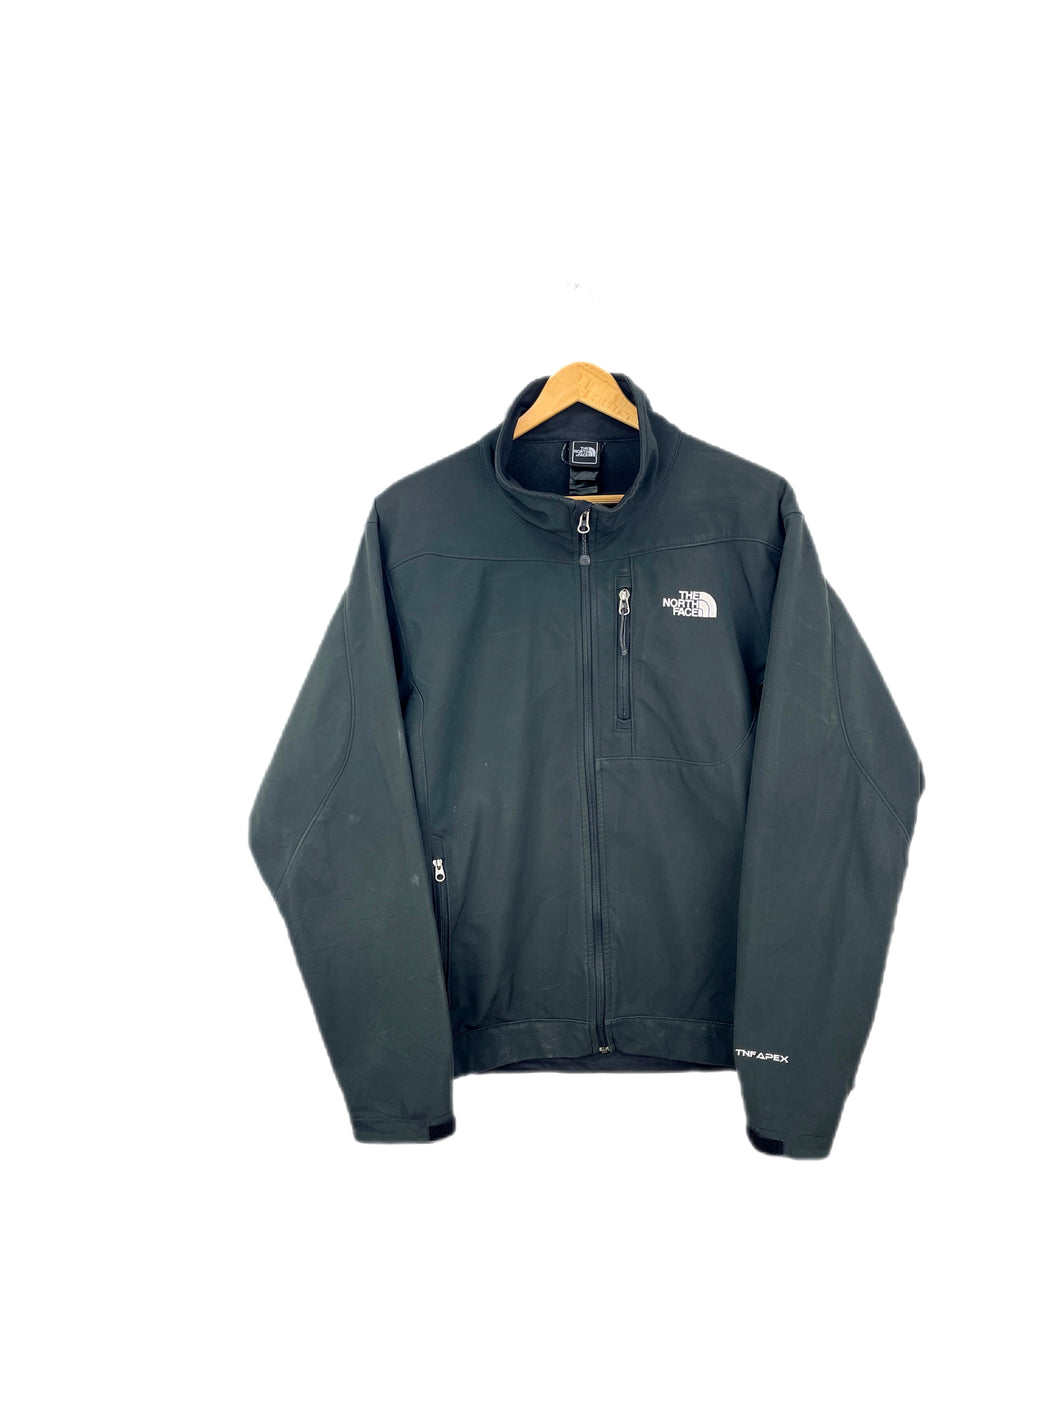 TNF Apex Jacket - Large